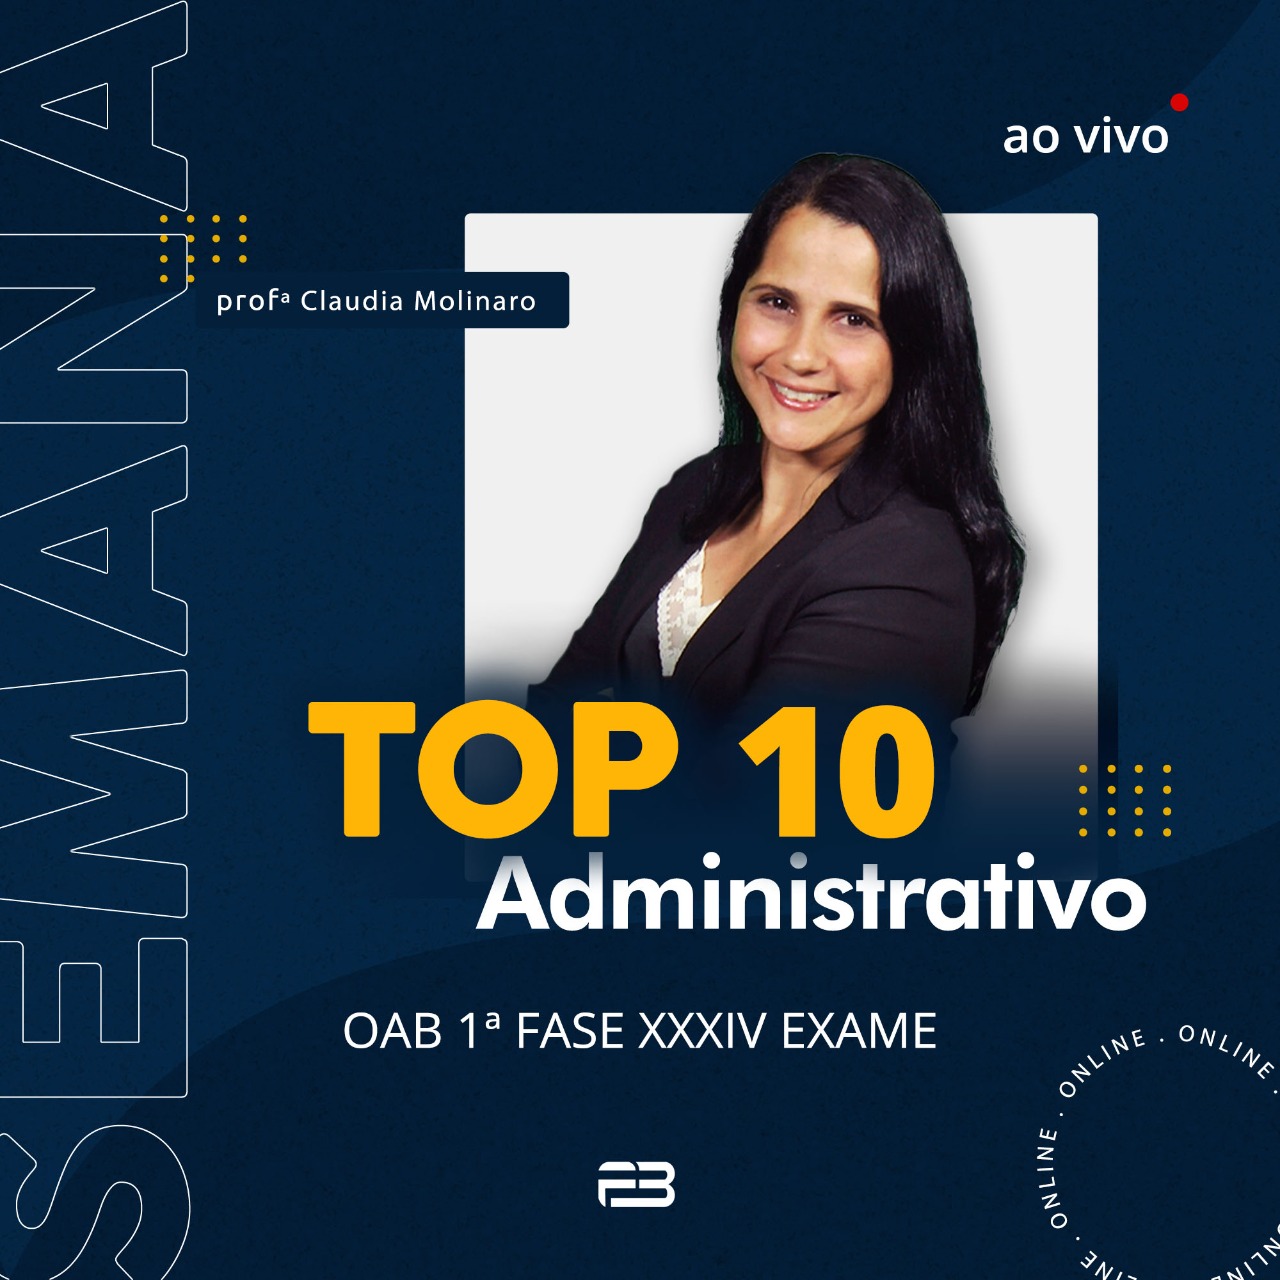 TOP 10 ADMINISTRATIVO - OAB 1º FASE XXXIV EXAME